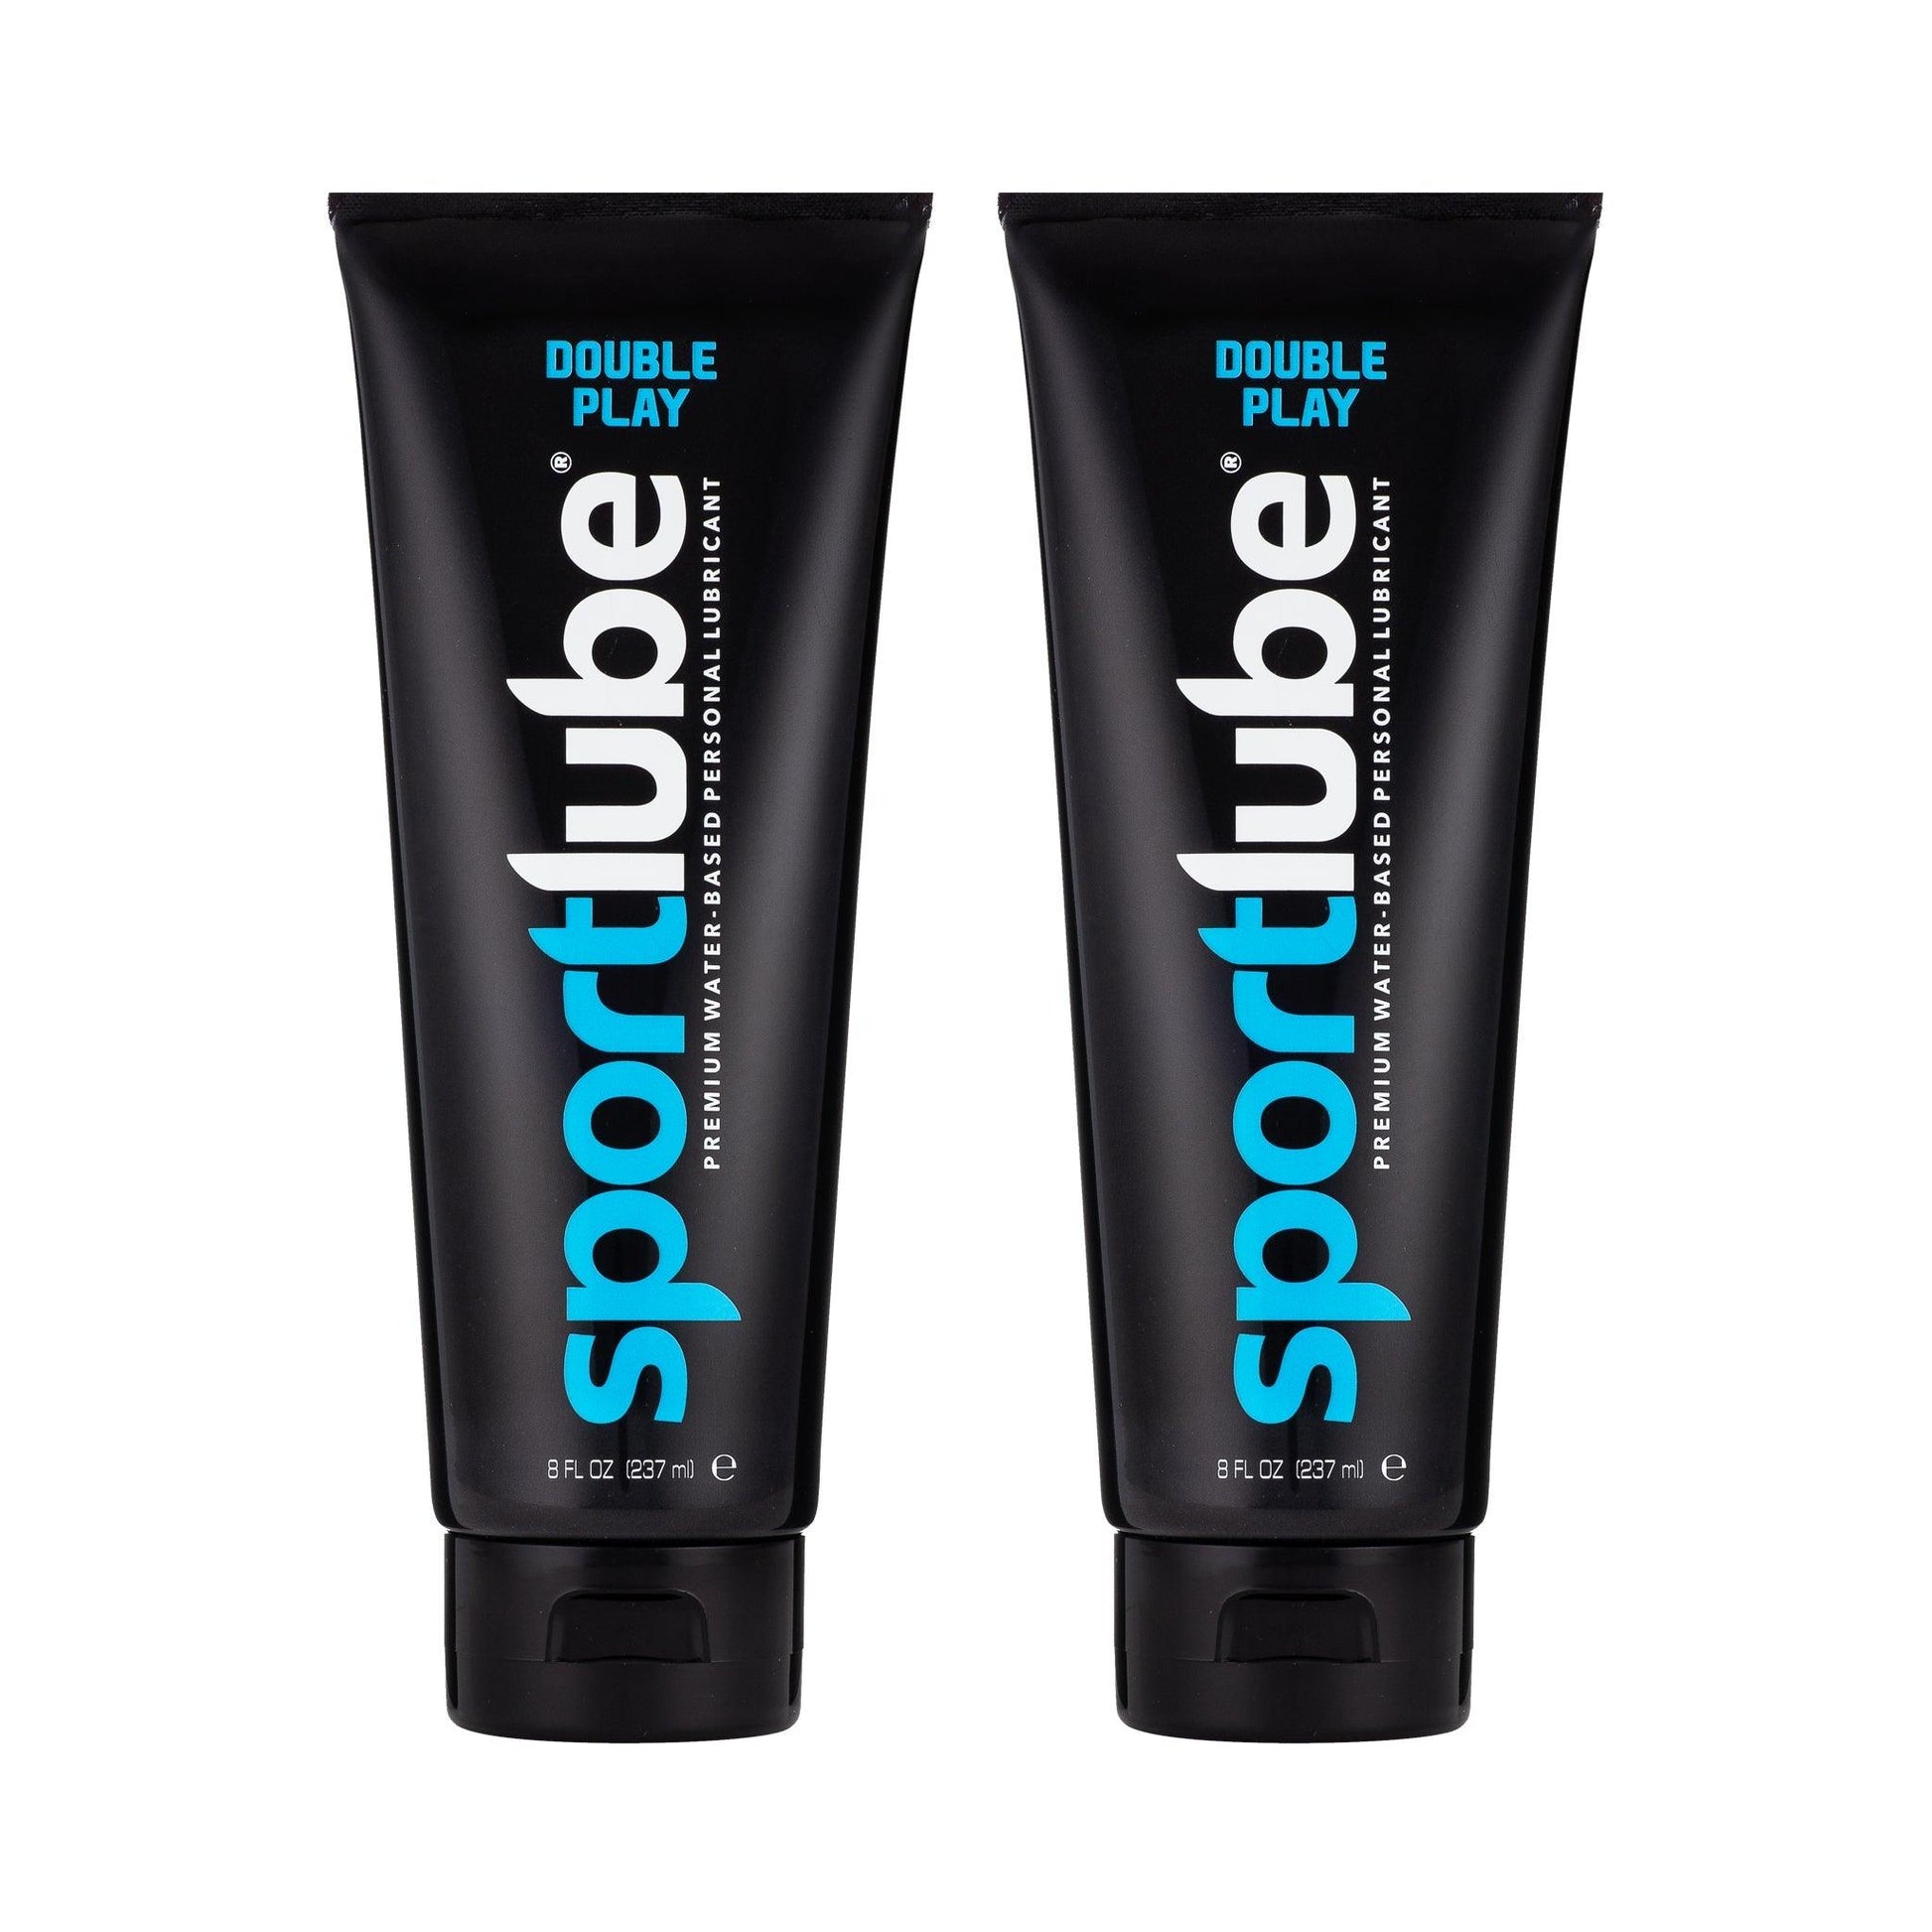 SportLube Double Play Premium Water-Based Personal Lubricant 8 oz (237 mL) Tube - sexlube.com